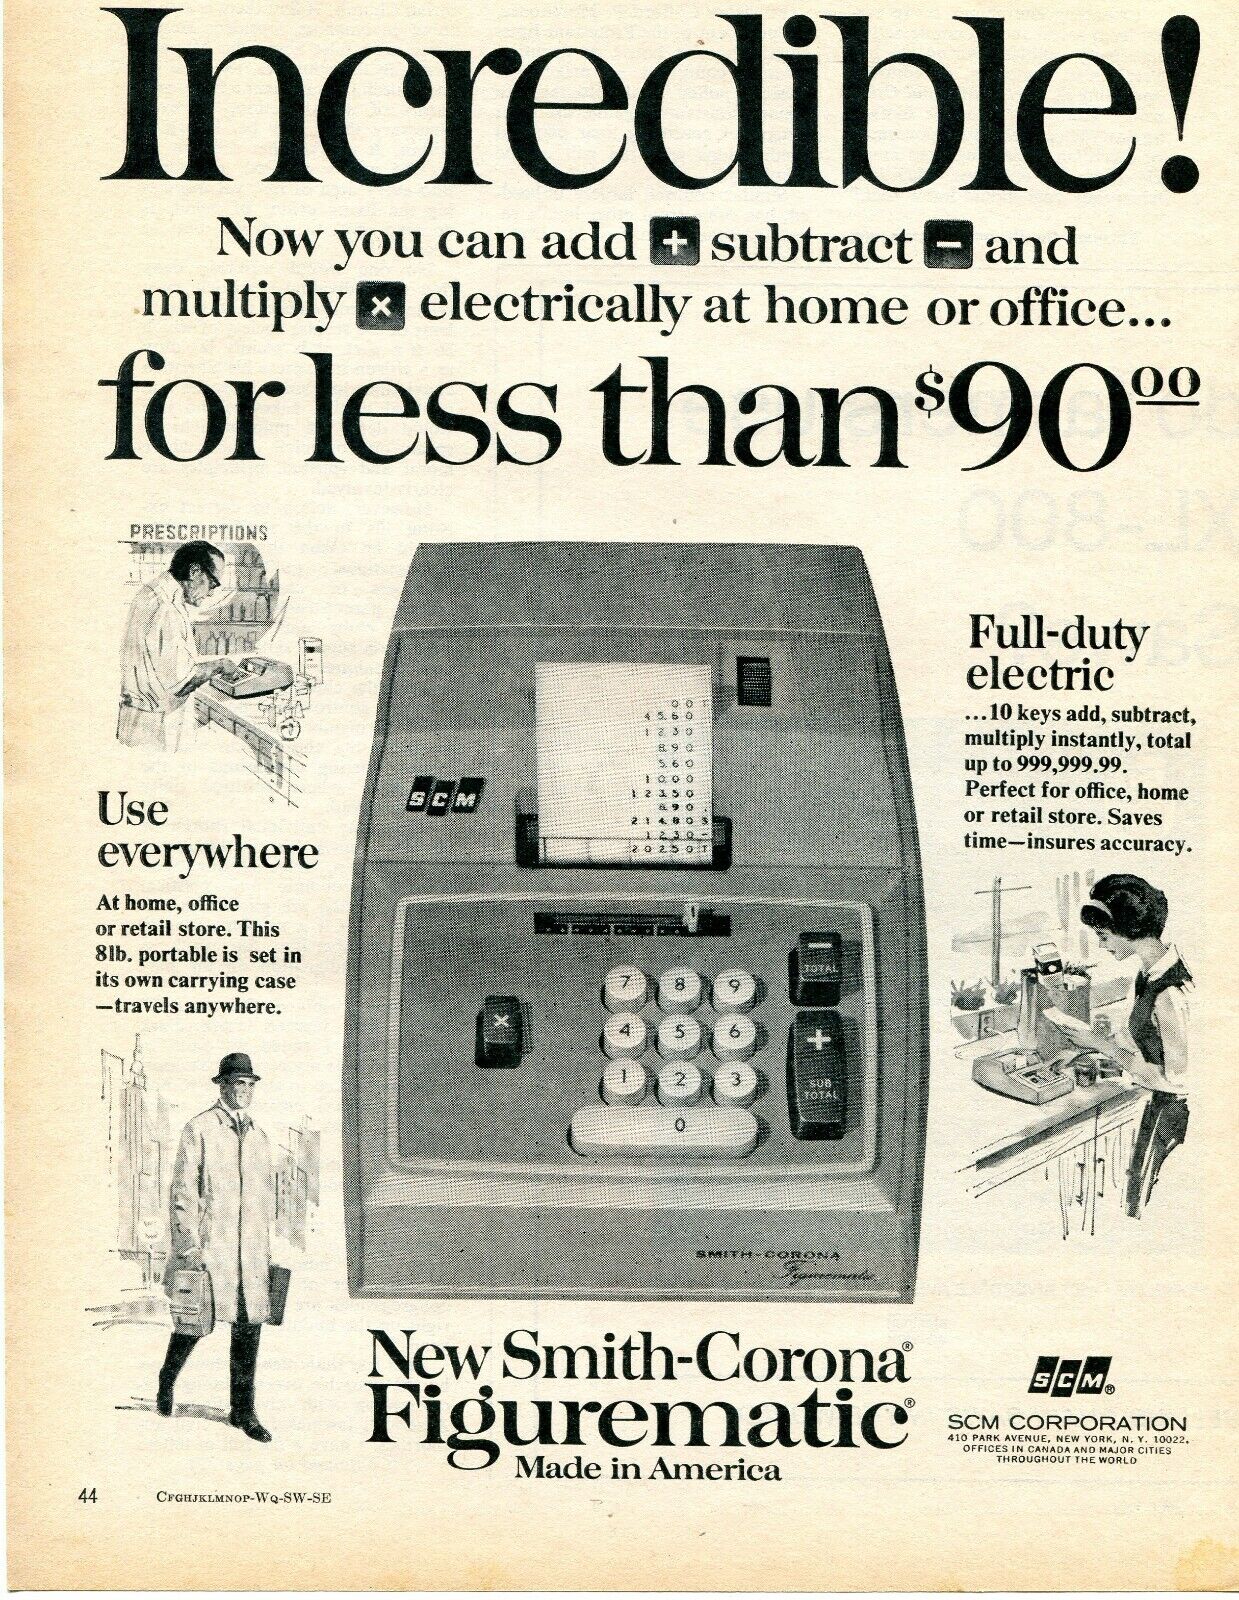 1966 Print Ad of Smith Corona SCM Figurematic Calculator